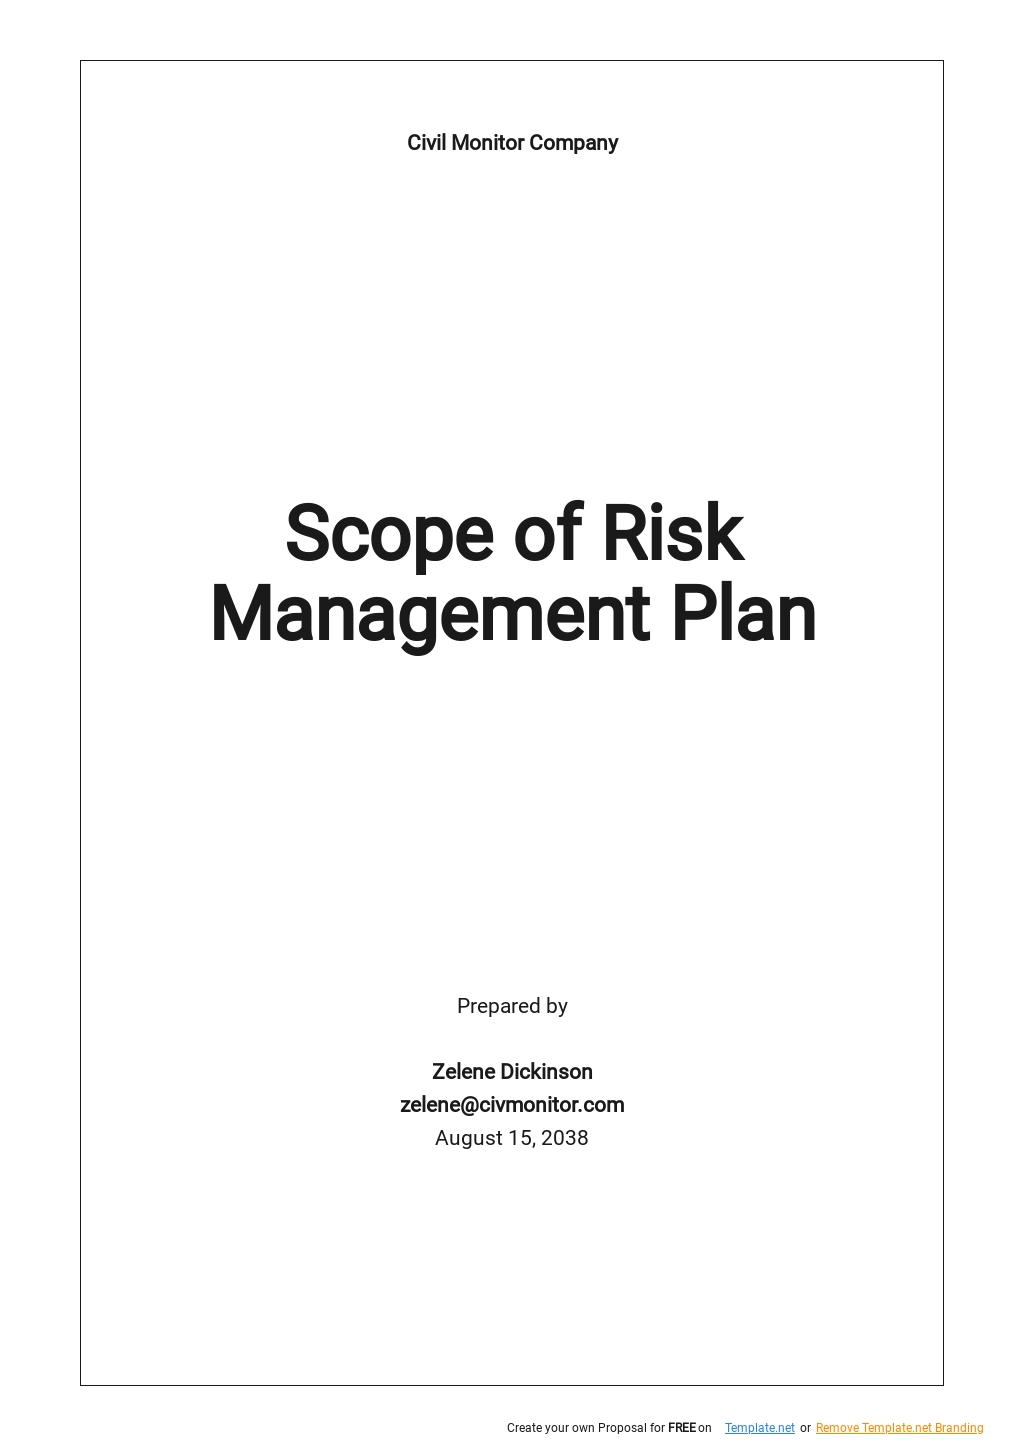 Scope of Risk Management Plan Template.jpe